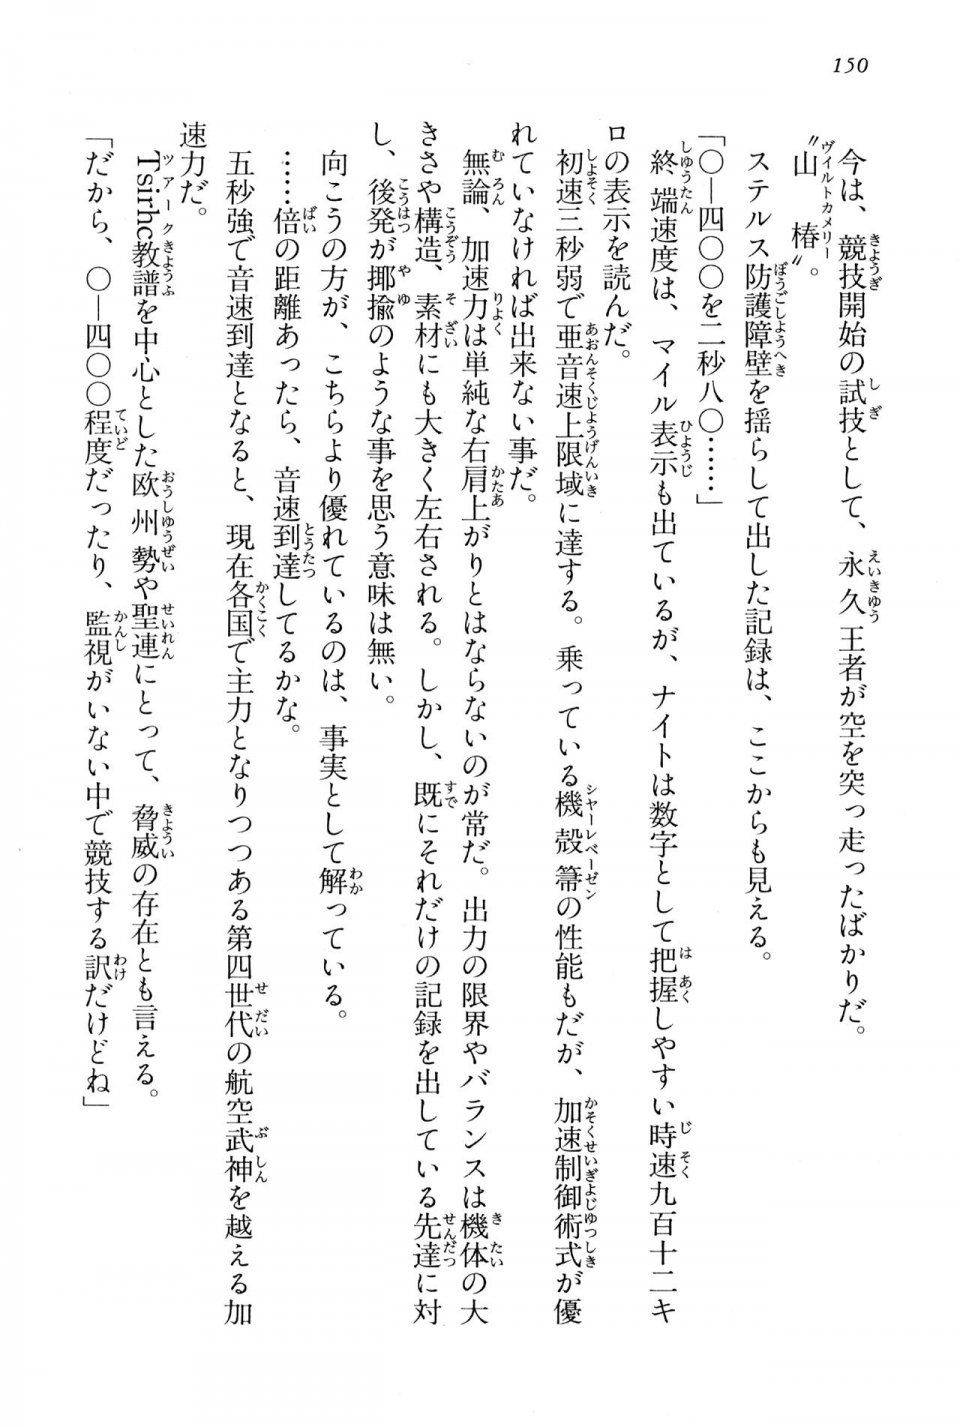 Kyoukai Senjou no Horizon BD Special Mininovel Vol 2(1B) - Photo #154